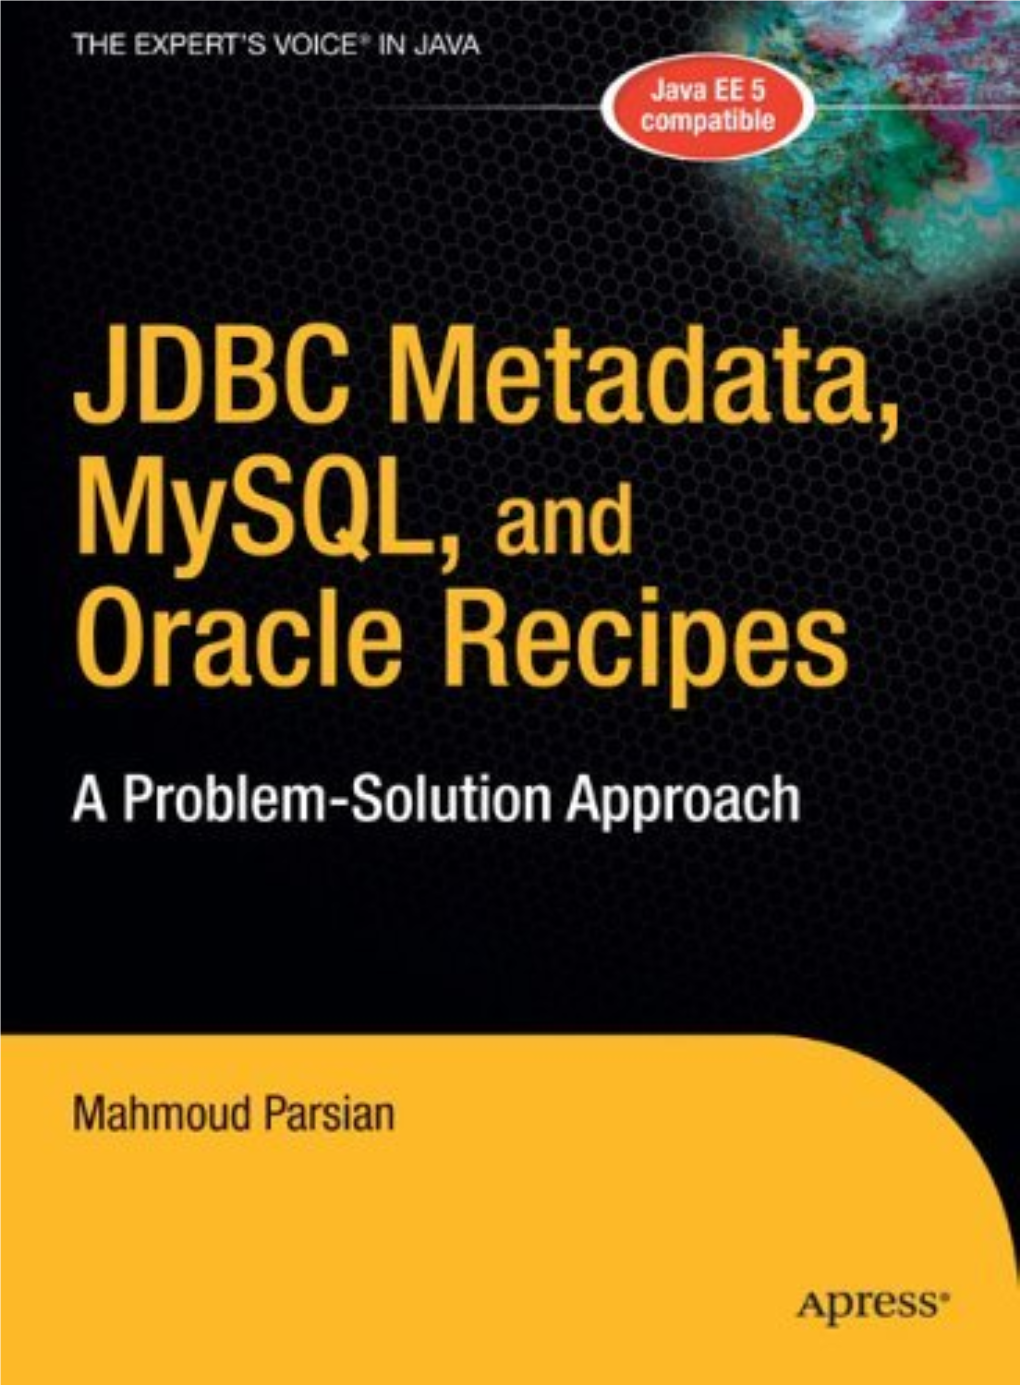 JDBC Metadata, Mysql, and Oracle Recipes a Problem-Solution Approach